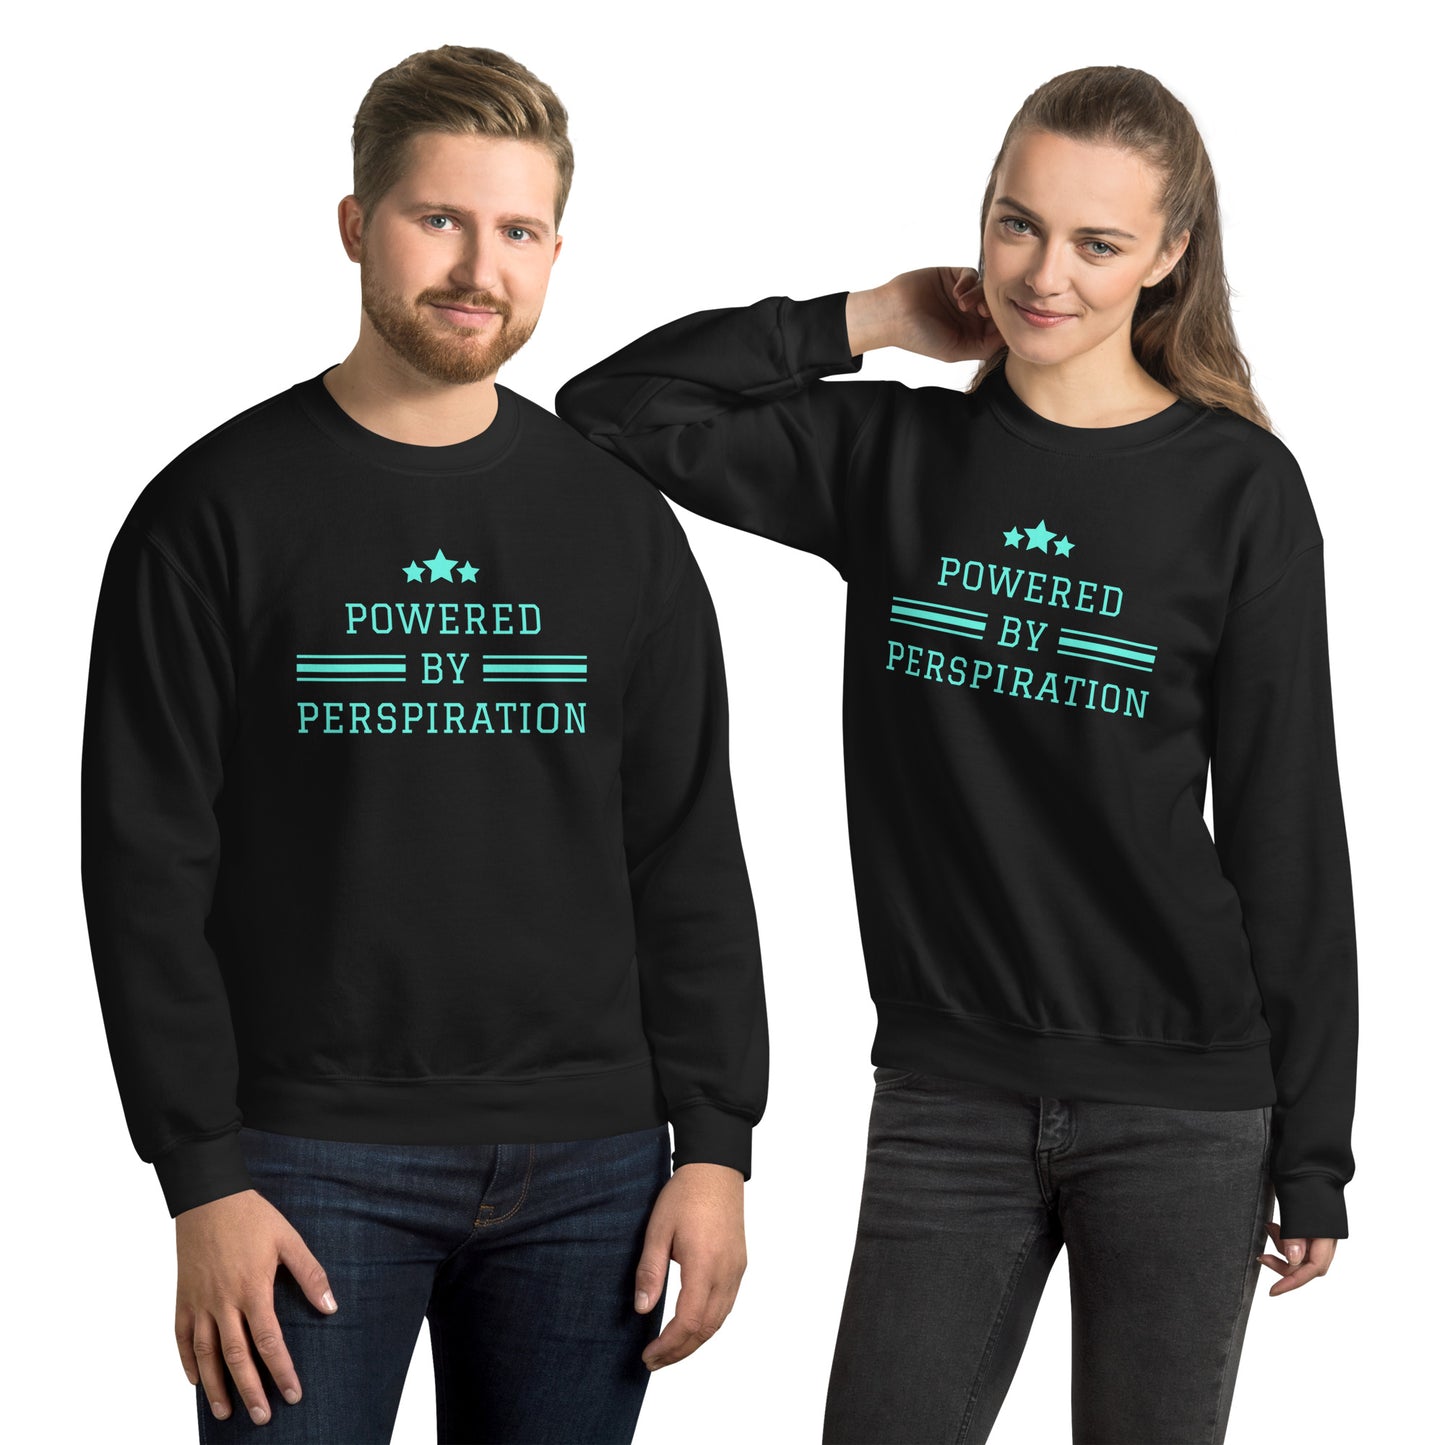 A Sweatshirt for BOTH Men and Women